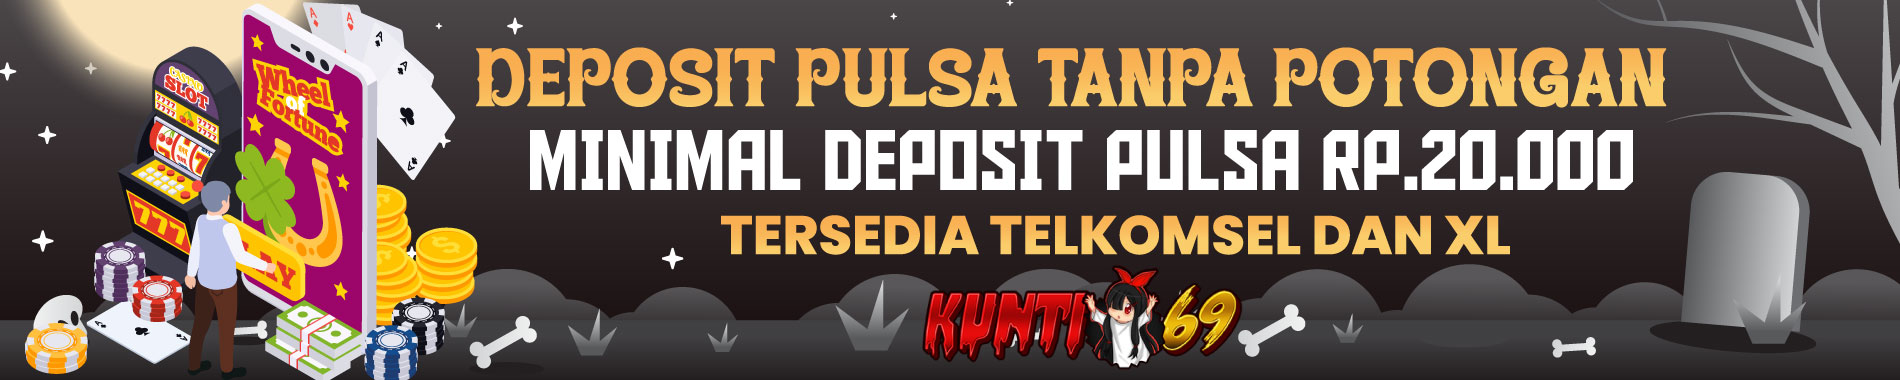 Kunti69 deposit pulsa tanpa potongan